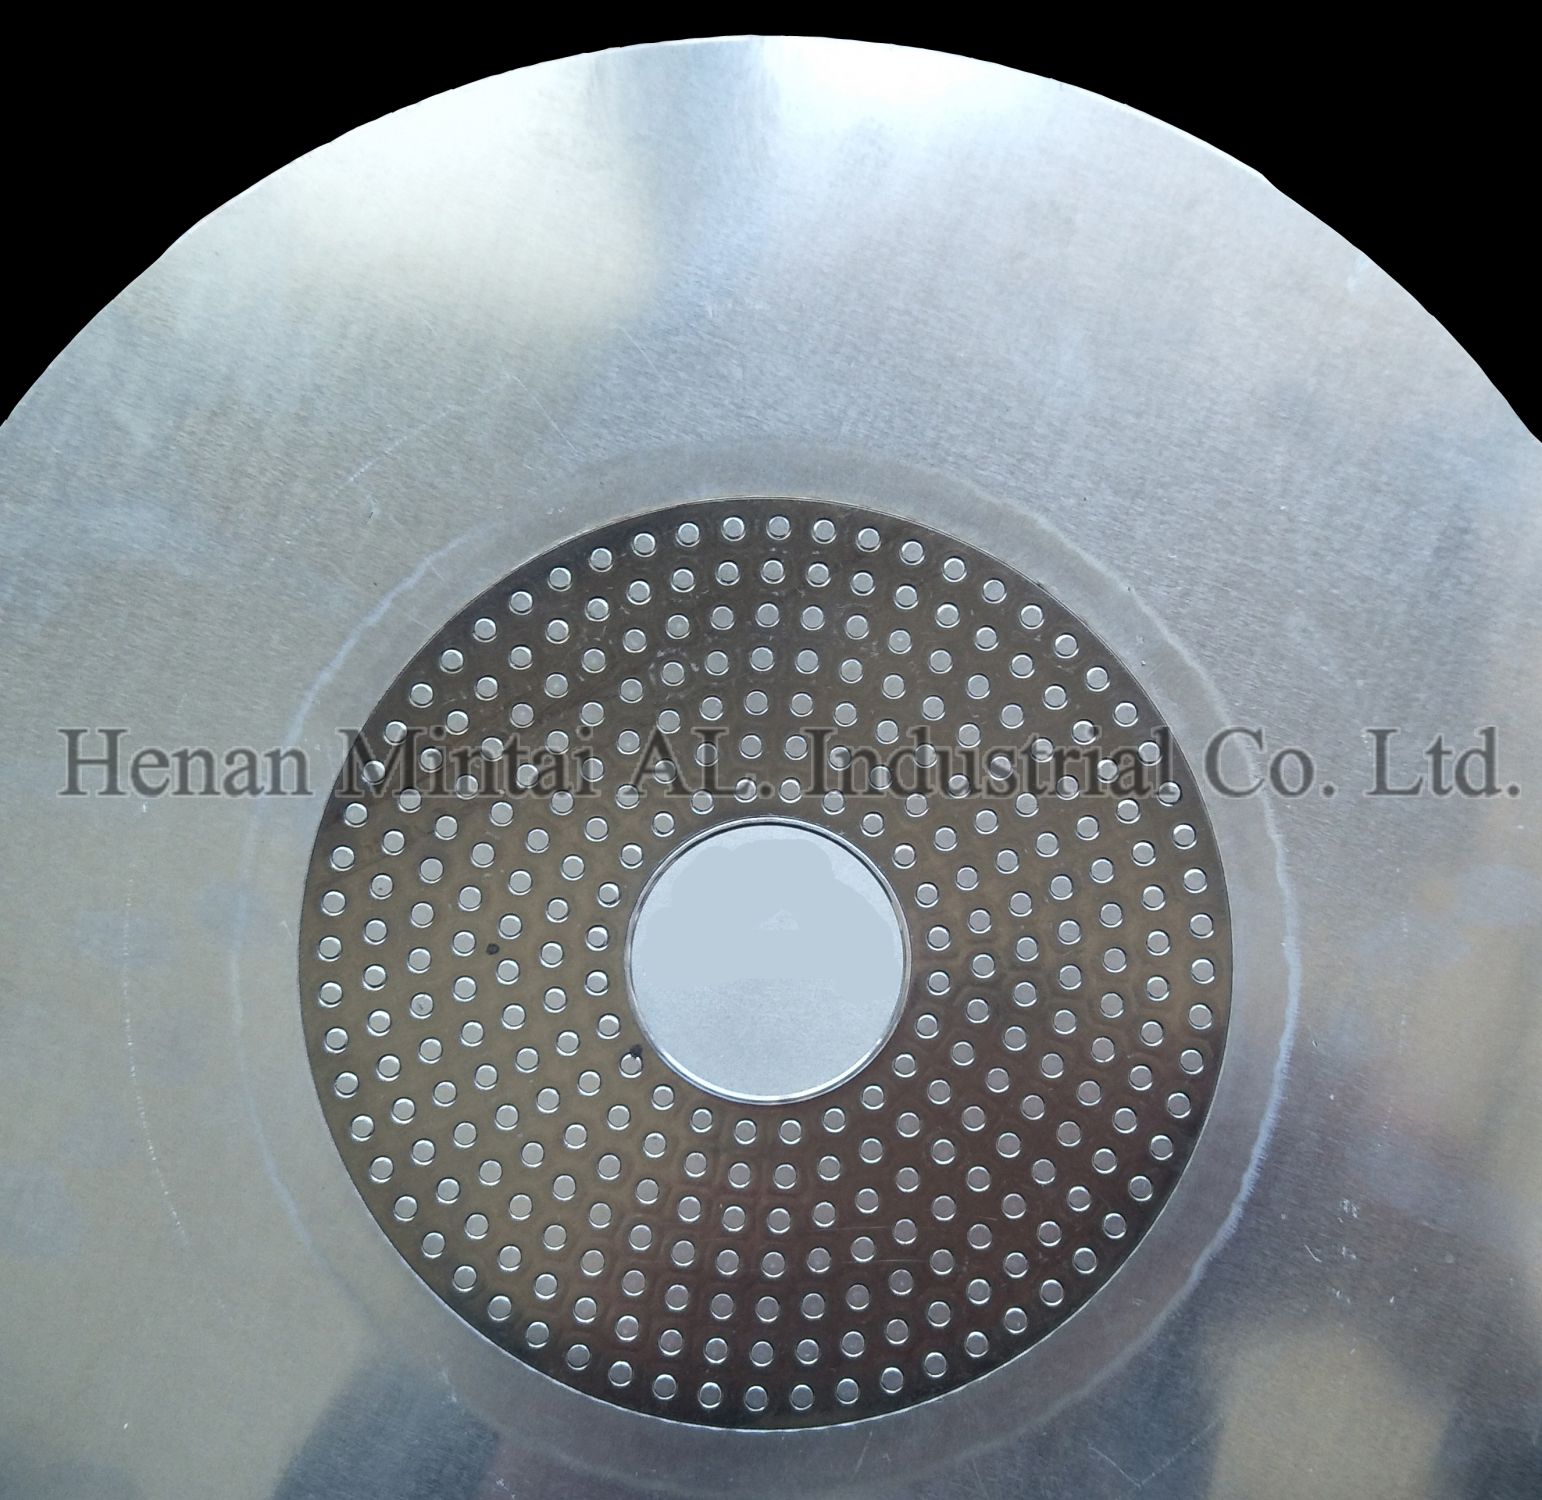 induction base aluminum discs